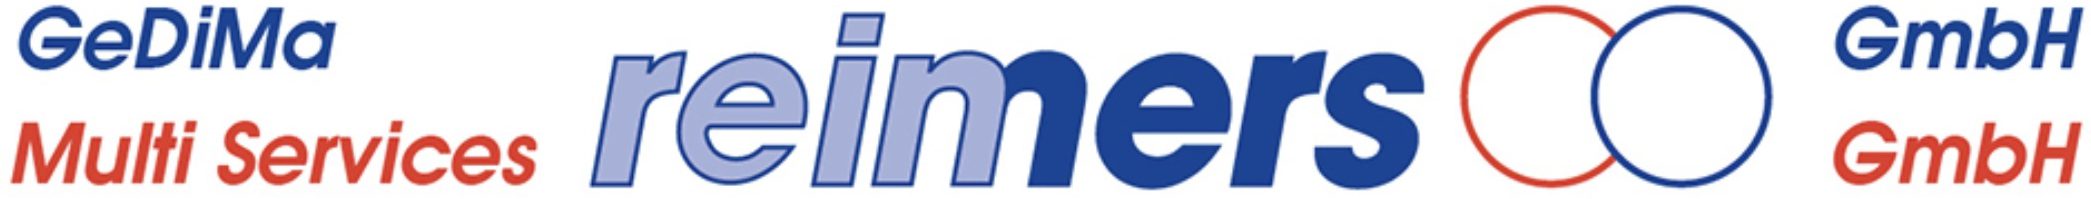 GeDiMa Reimers GmbH & Multi Services Reimers GmbH